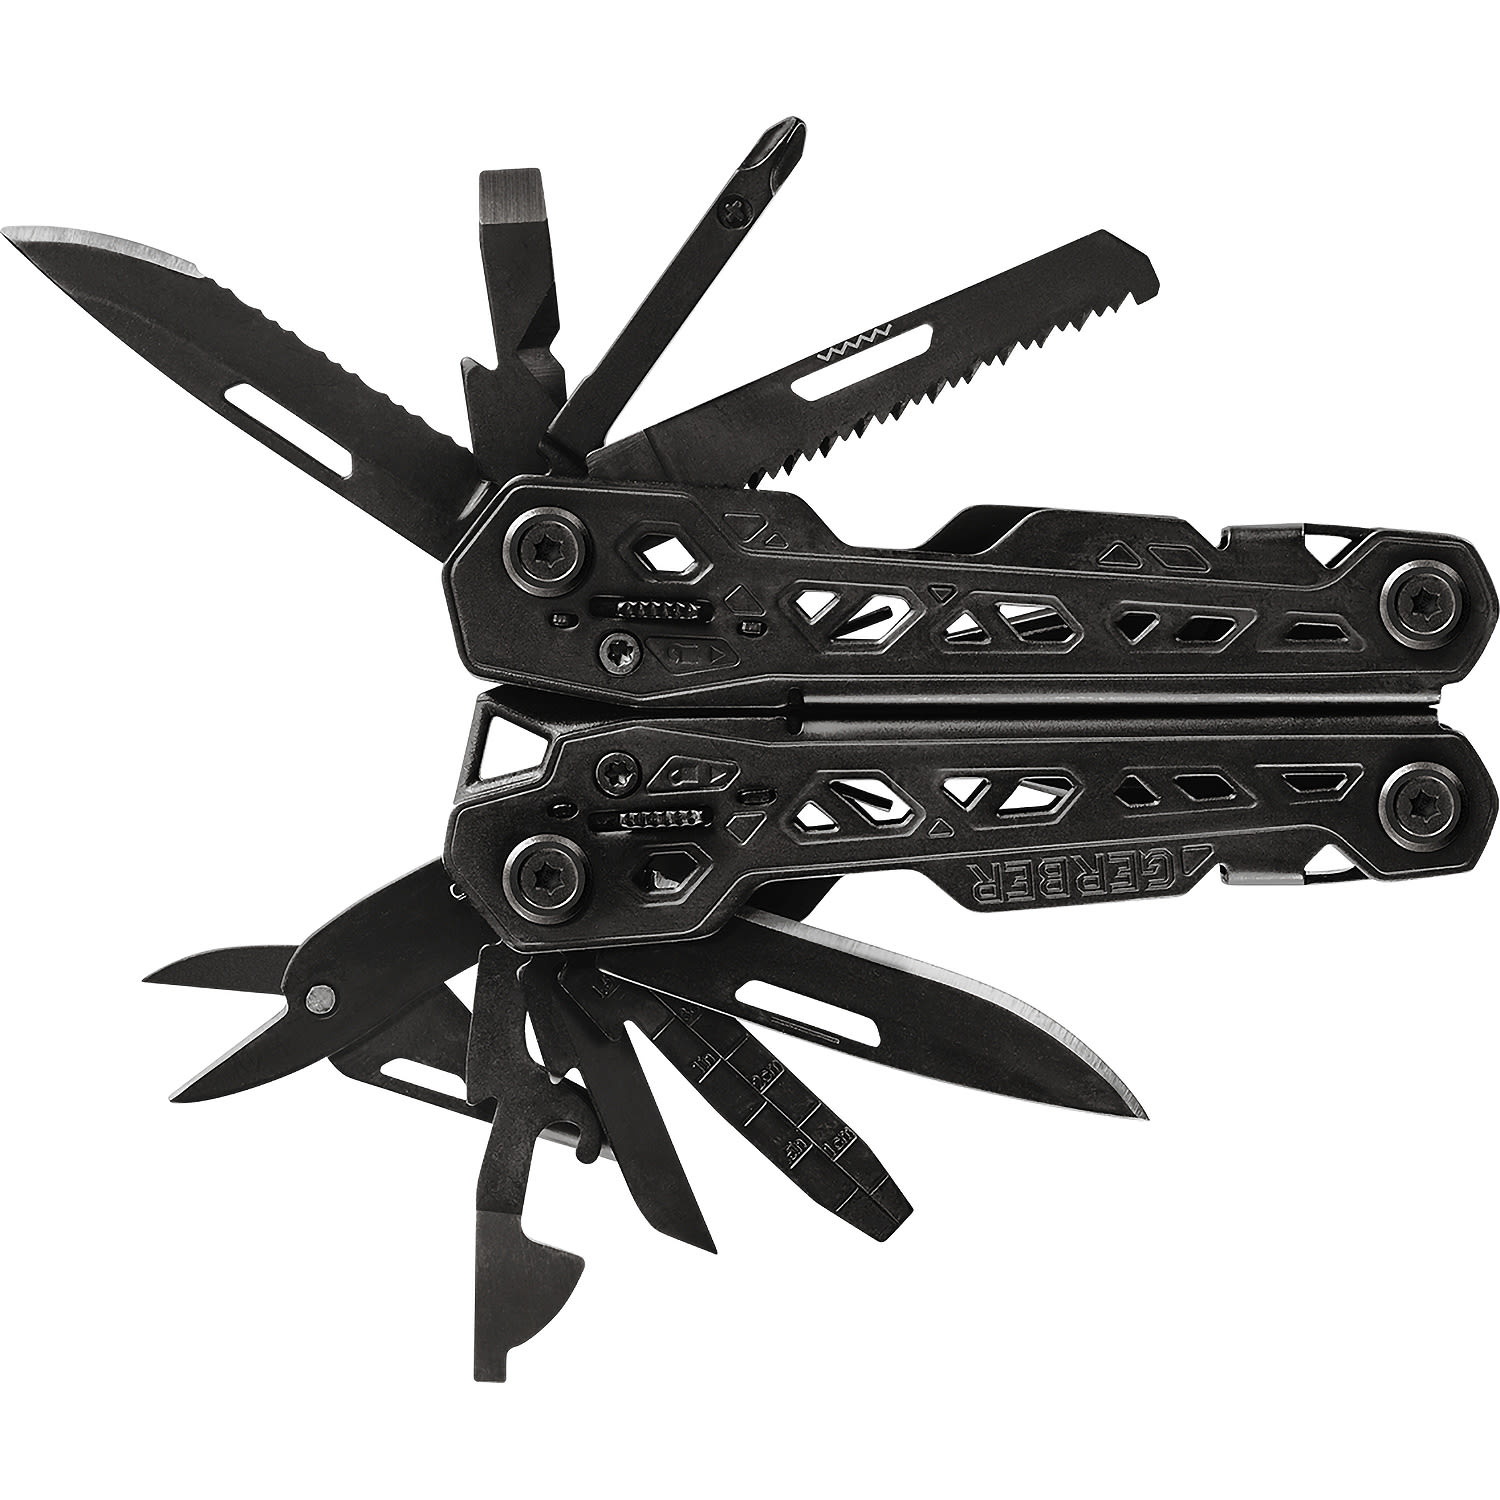 Gerber® Truss Black Multi-Tool